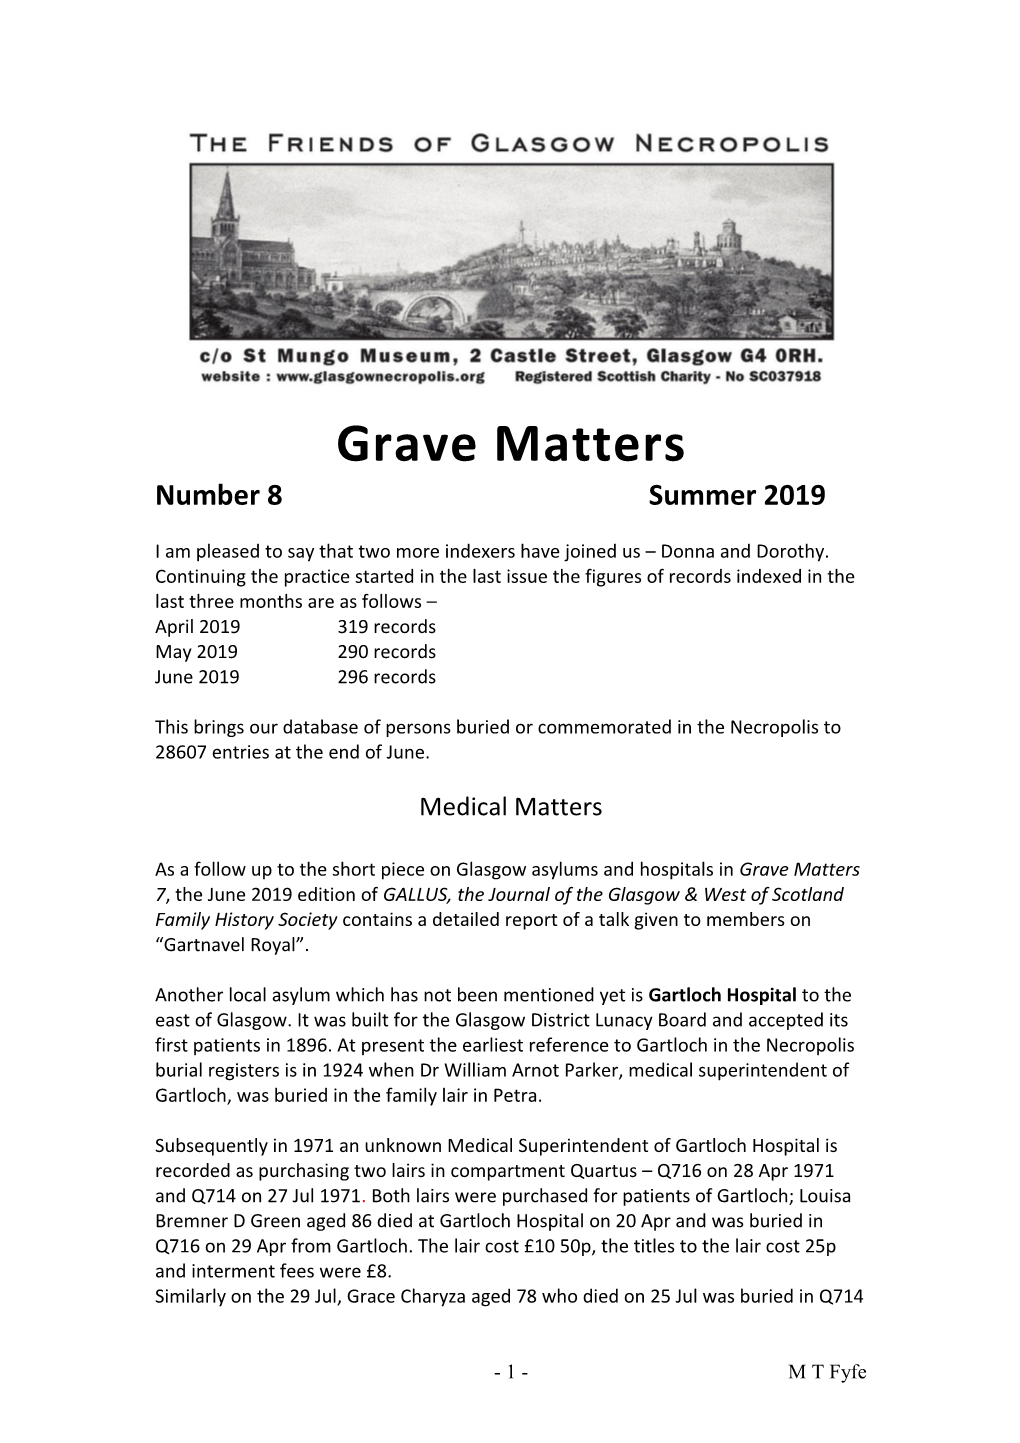 Grave Matters Number 8 Summer 2019